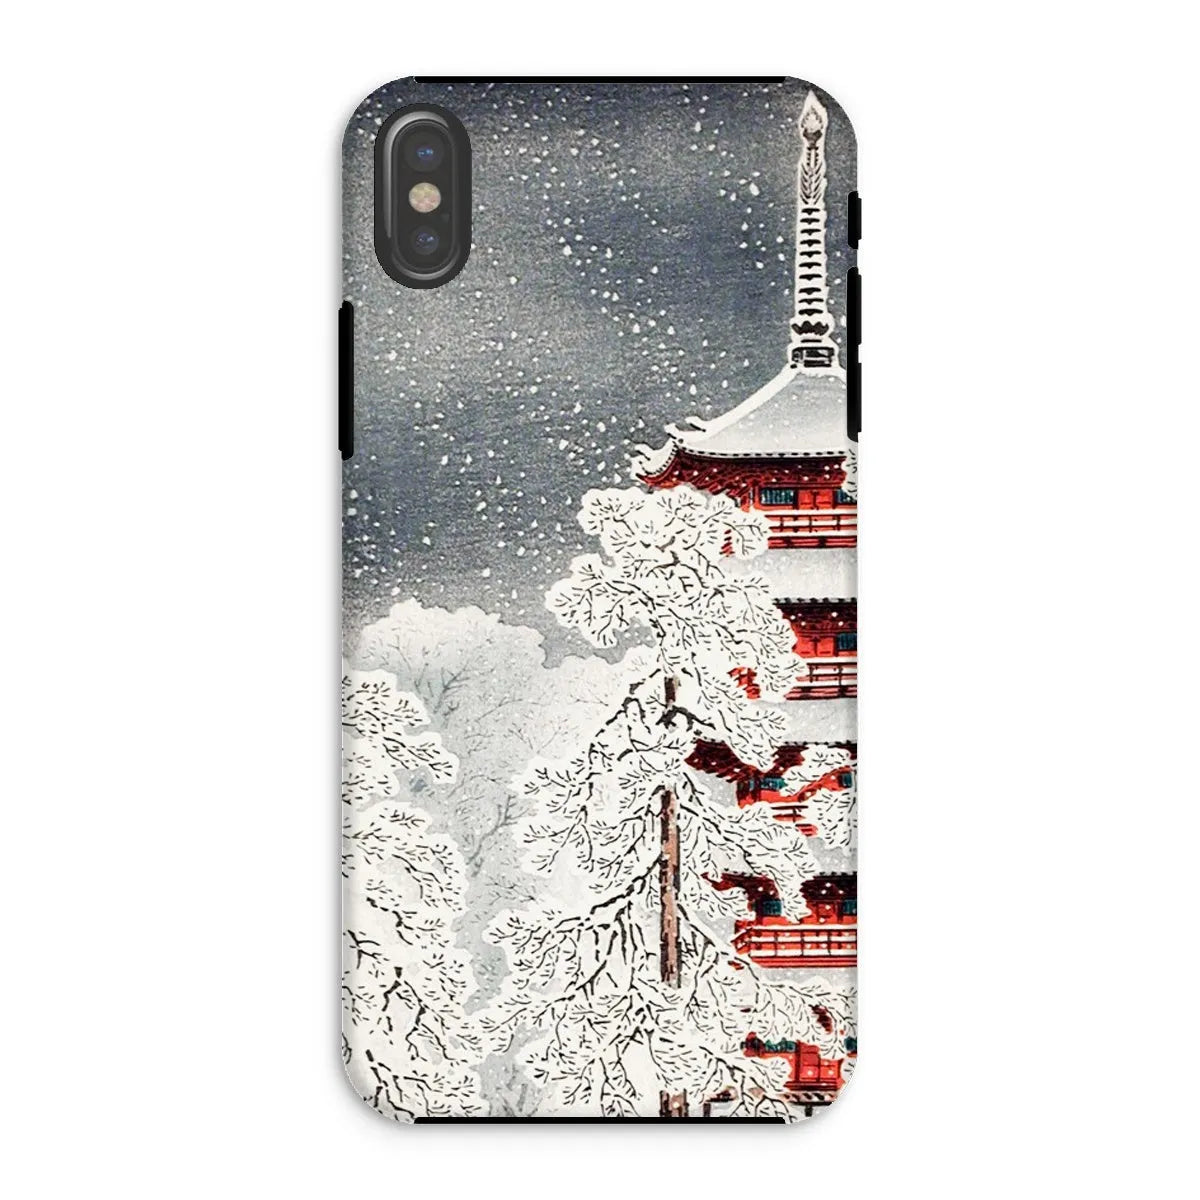 Snow At Asakusa - Shin-hanga Phone Case - Takahashi Shōtei - Iphone Xs / Matte - Mobile Phone Cases - Aesthetic Art